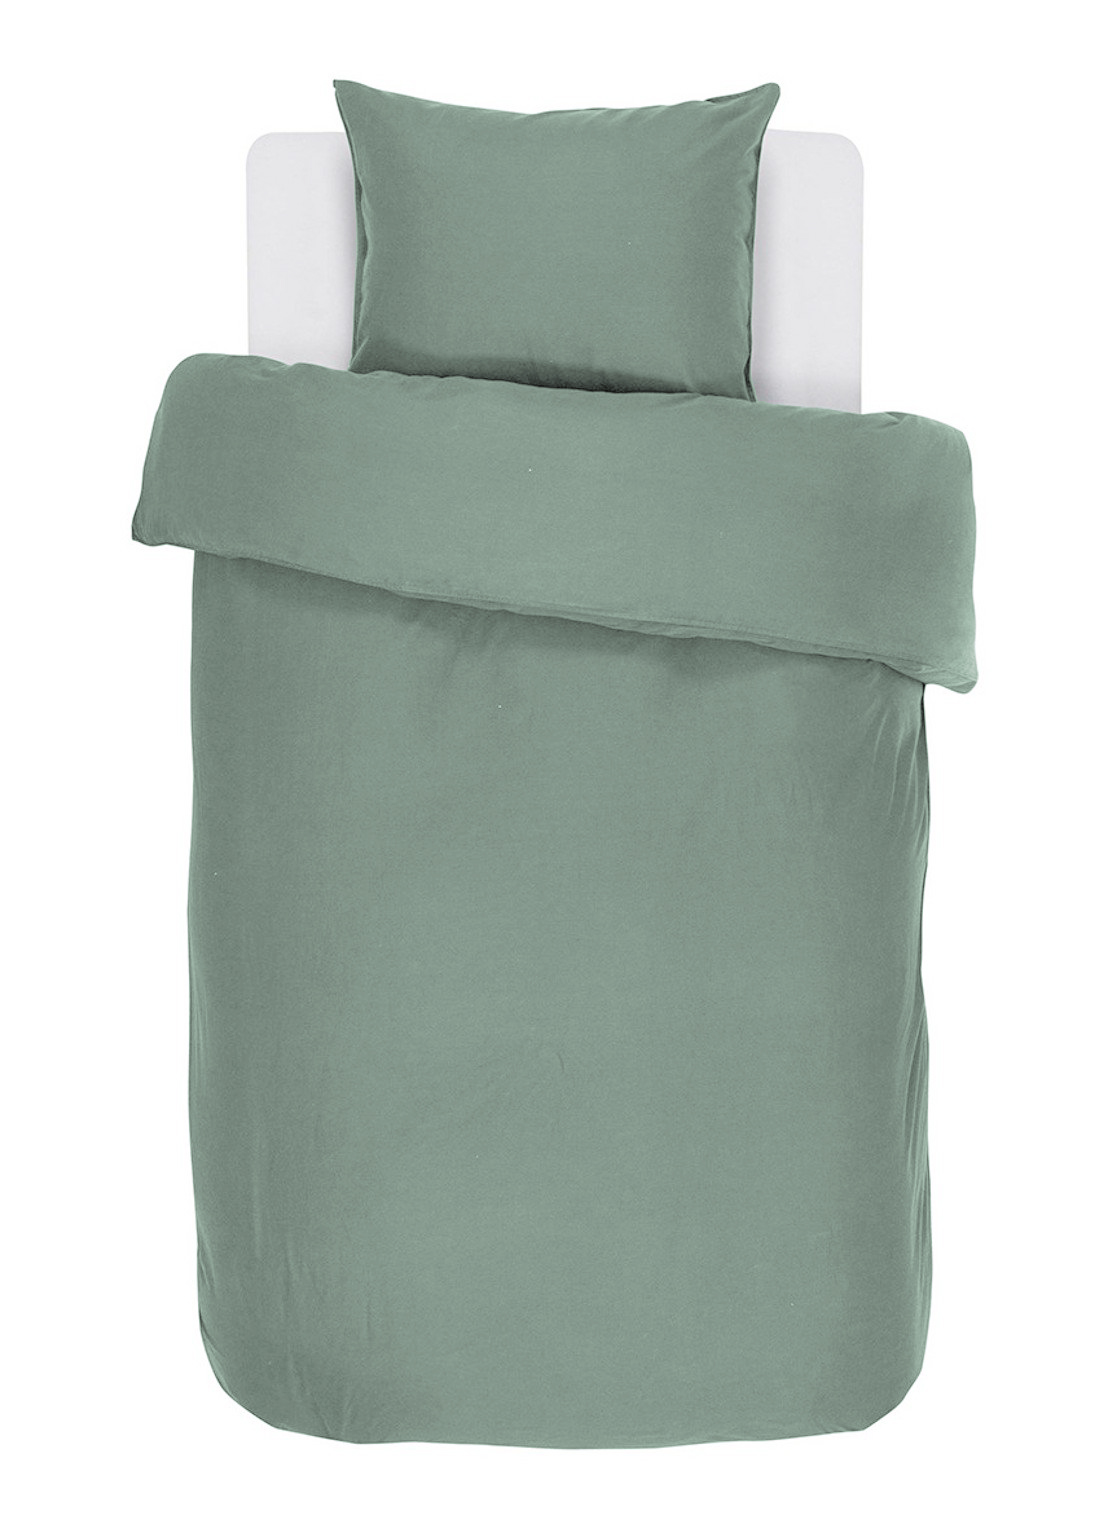 Duvet cover  IRIS, Stone washed uni cotton, 140x200, green